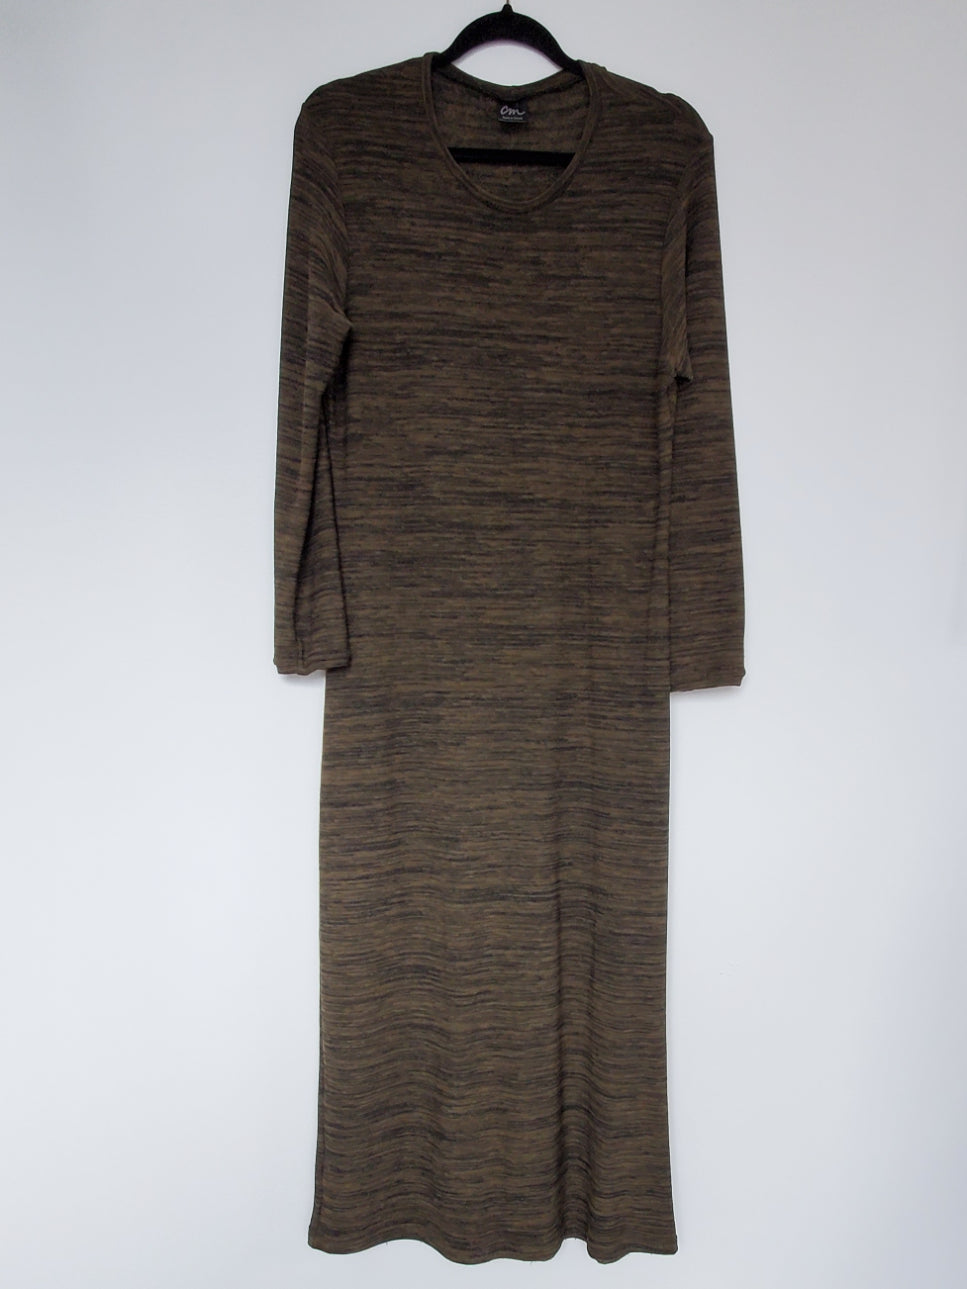 CM Long Sleeve Long Dress - Fuzzy Brown & Black (L) - 1of1